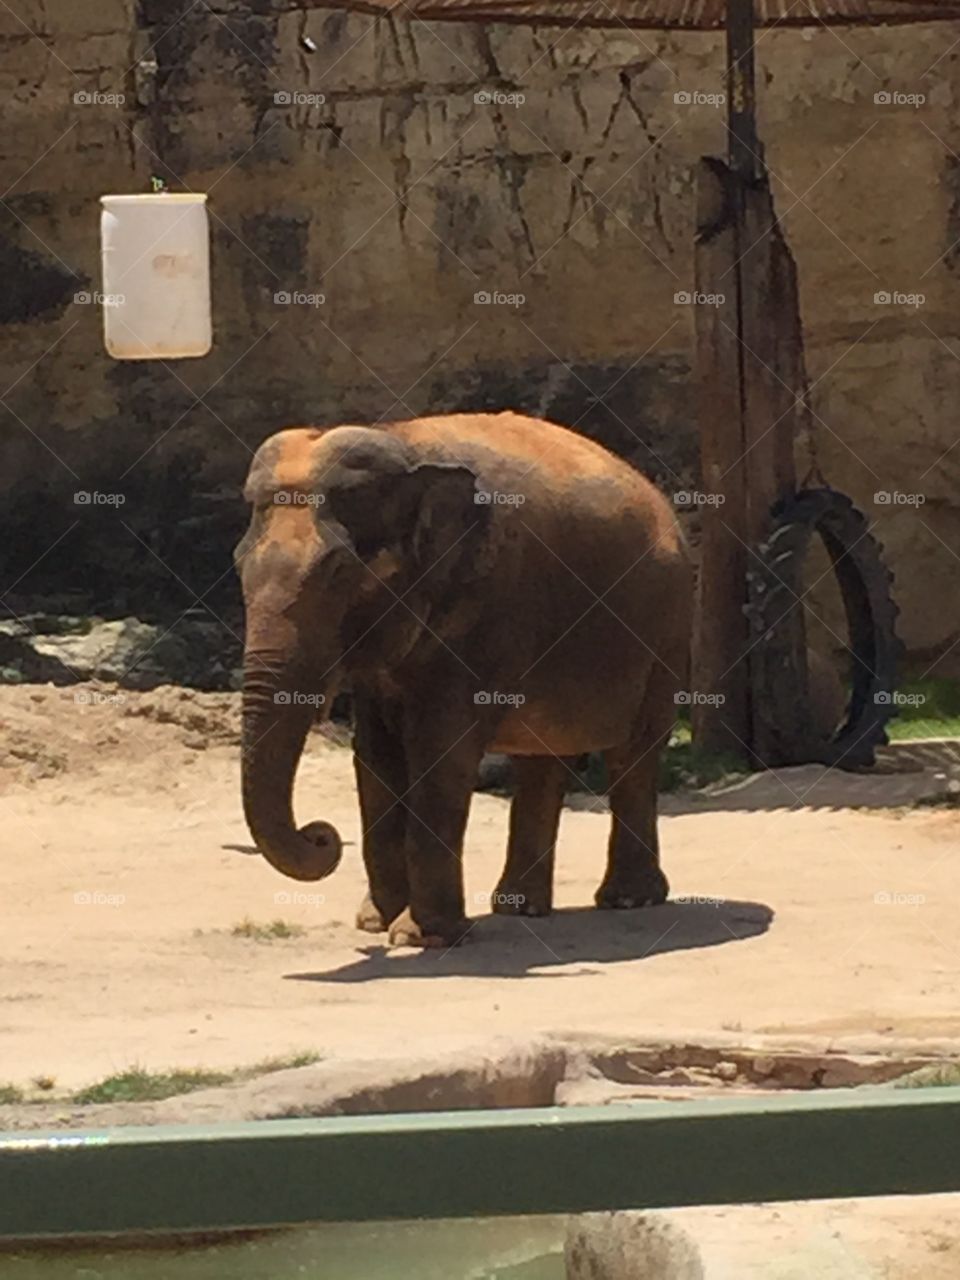 Elephant. Elephant at the zoo